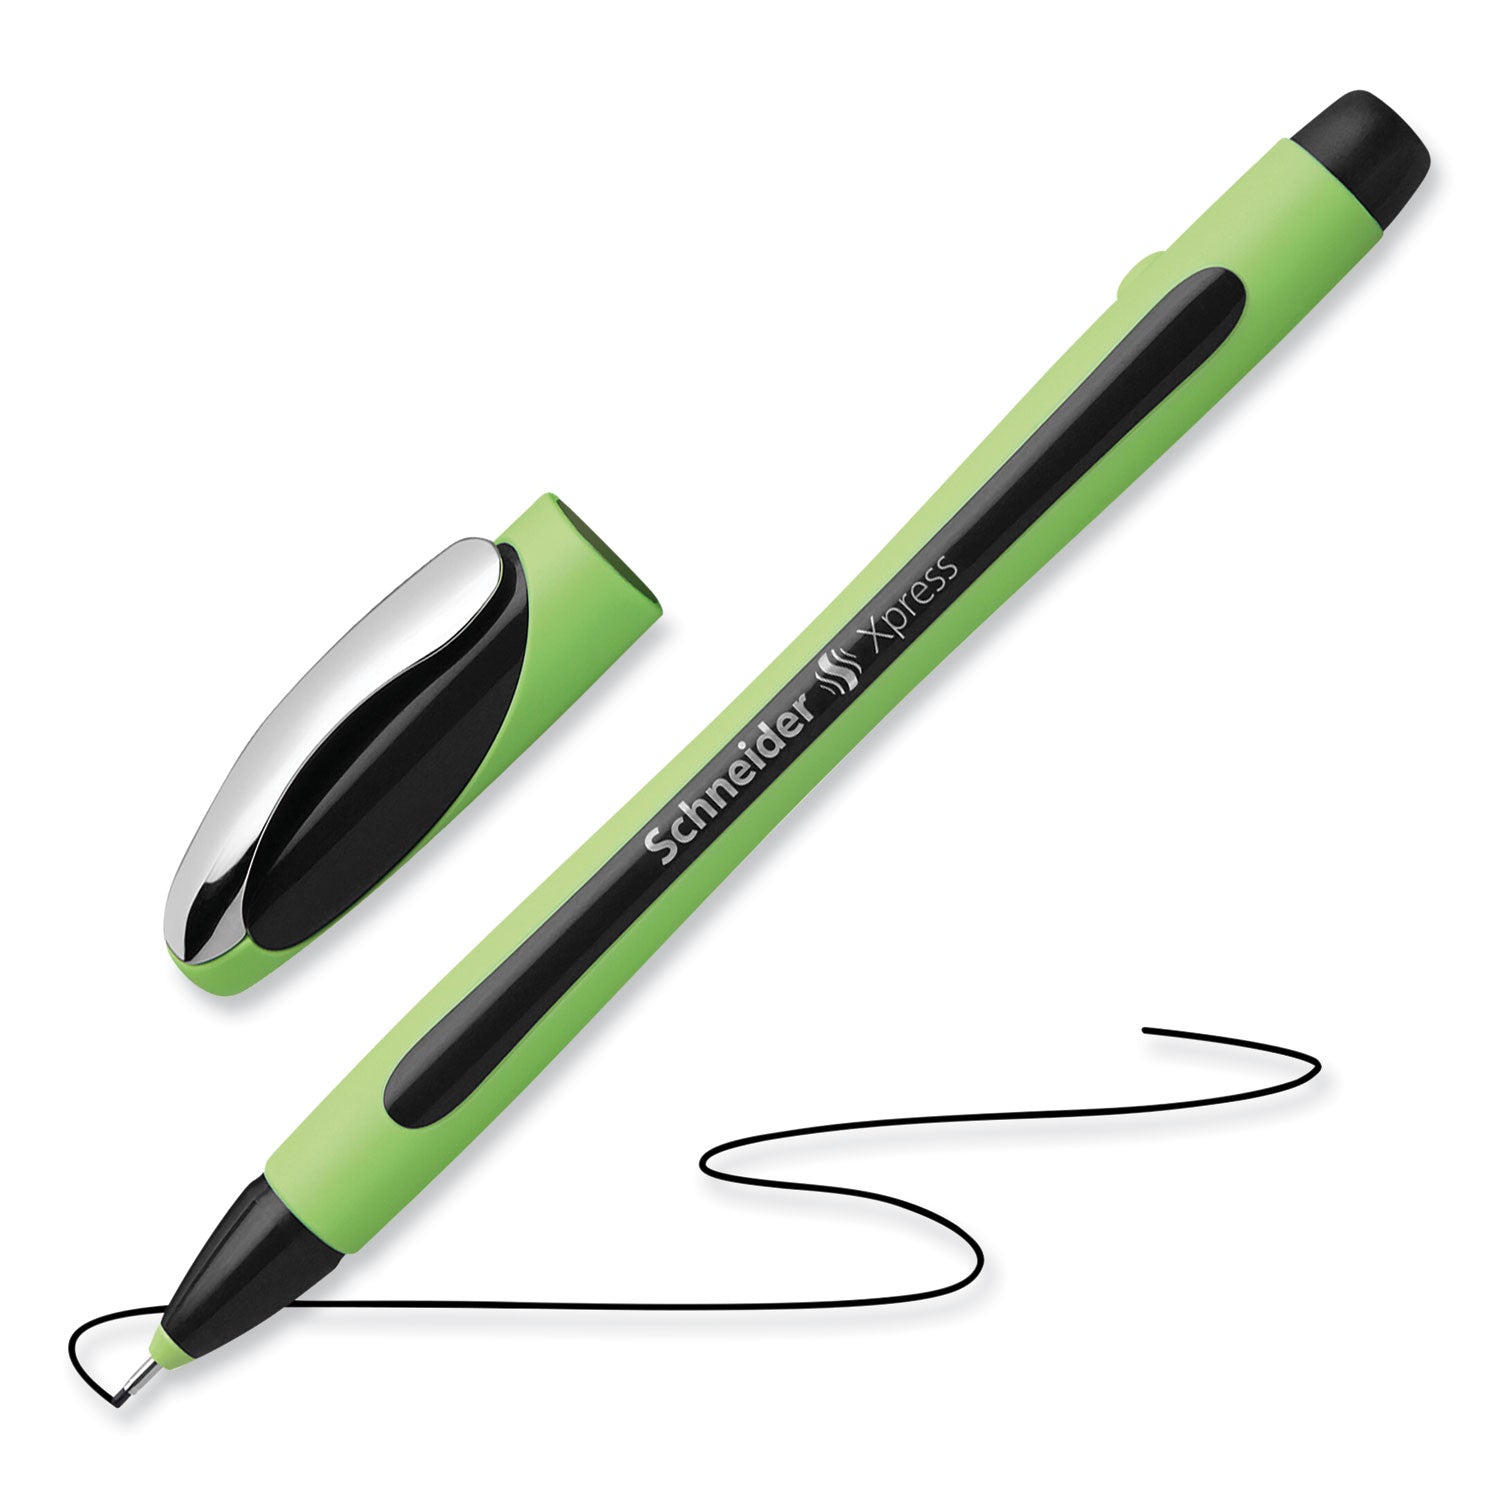 xpress-fineliner-porous-point-pen-stick-medium-08-mm-black-ink-black-green-barrel-10-box_red190001 - 2